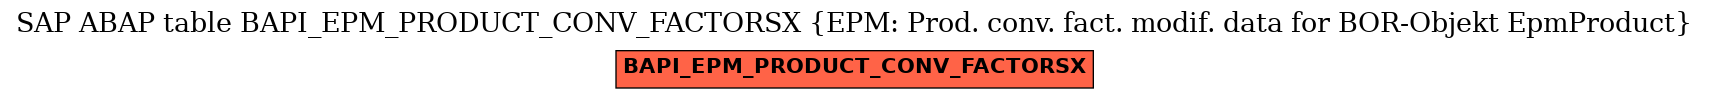 E-R Diagram for table BAPI_EPM_PRODUCT_CONV_FACTORSX (EPM: Prod. conv. fact. modif. data for BOR-Objekt EpmProduct)